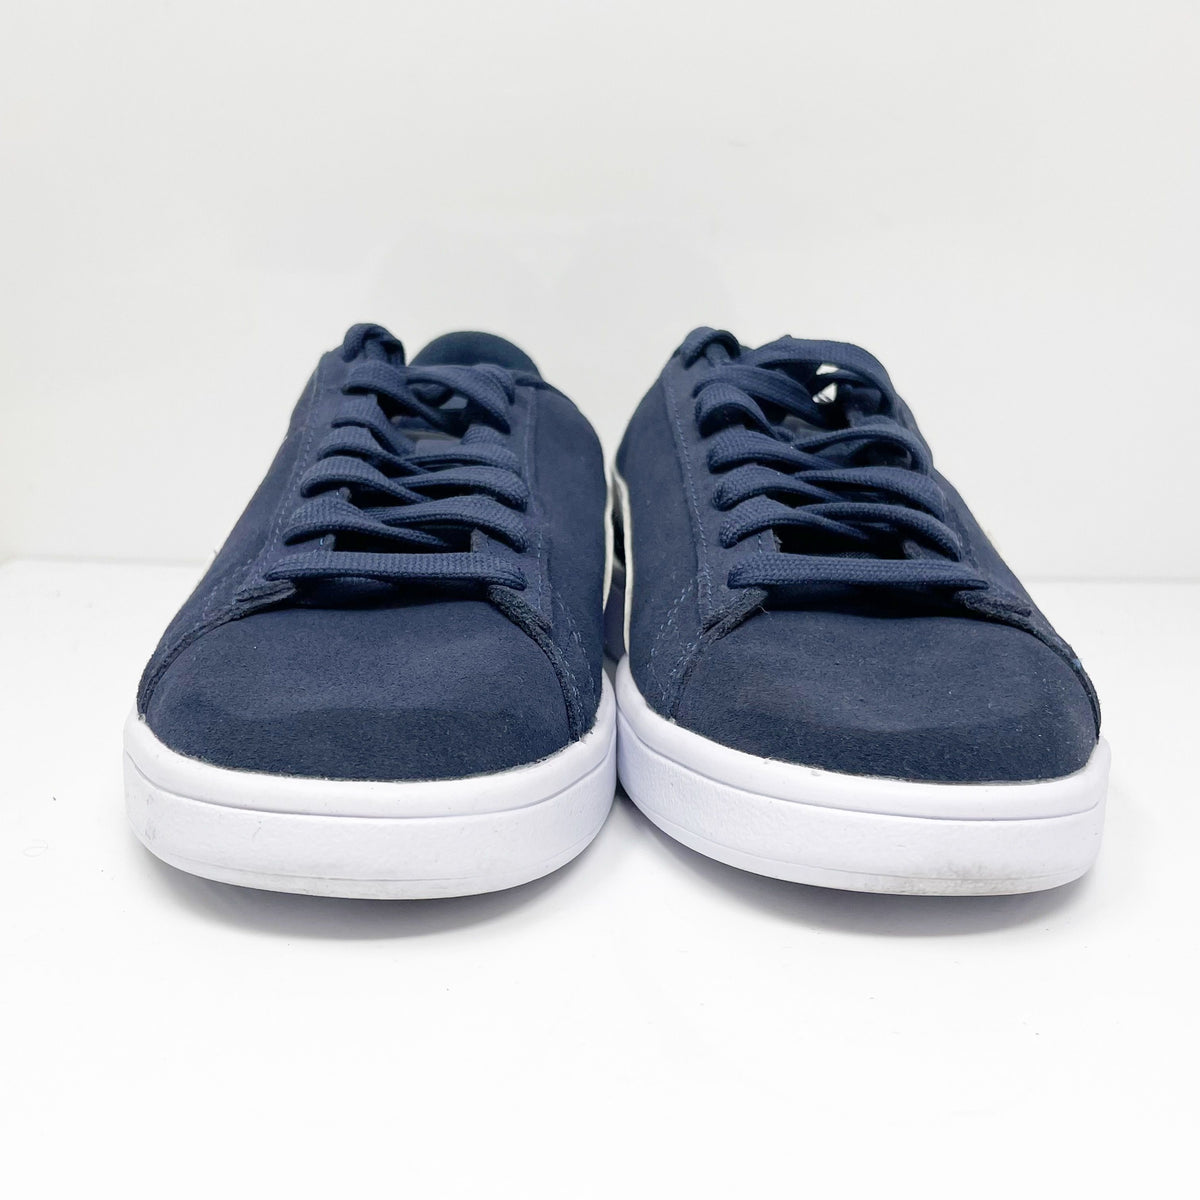 Puma Mens Smash V2 364989 04 Blue Casual Shoes Sneakers Size 10.5